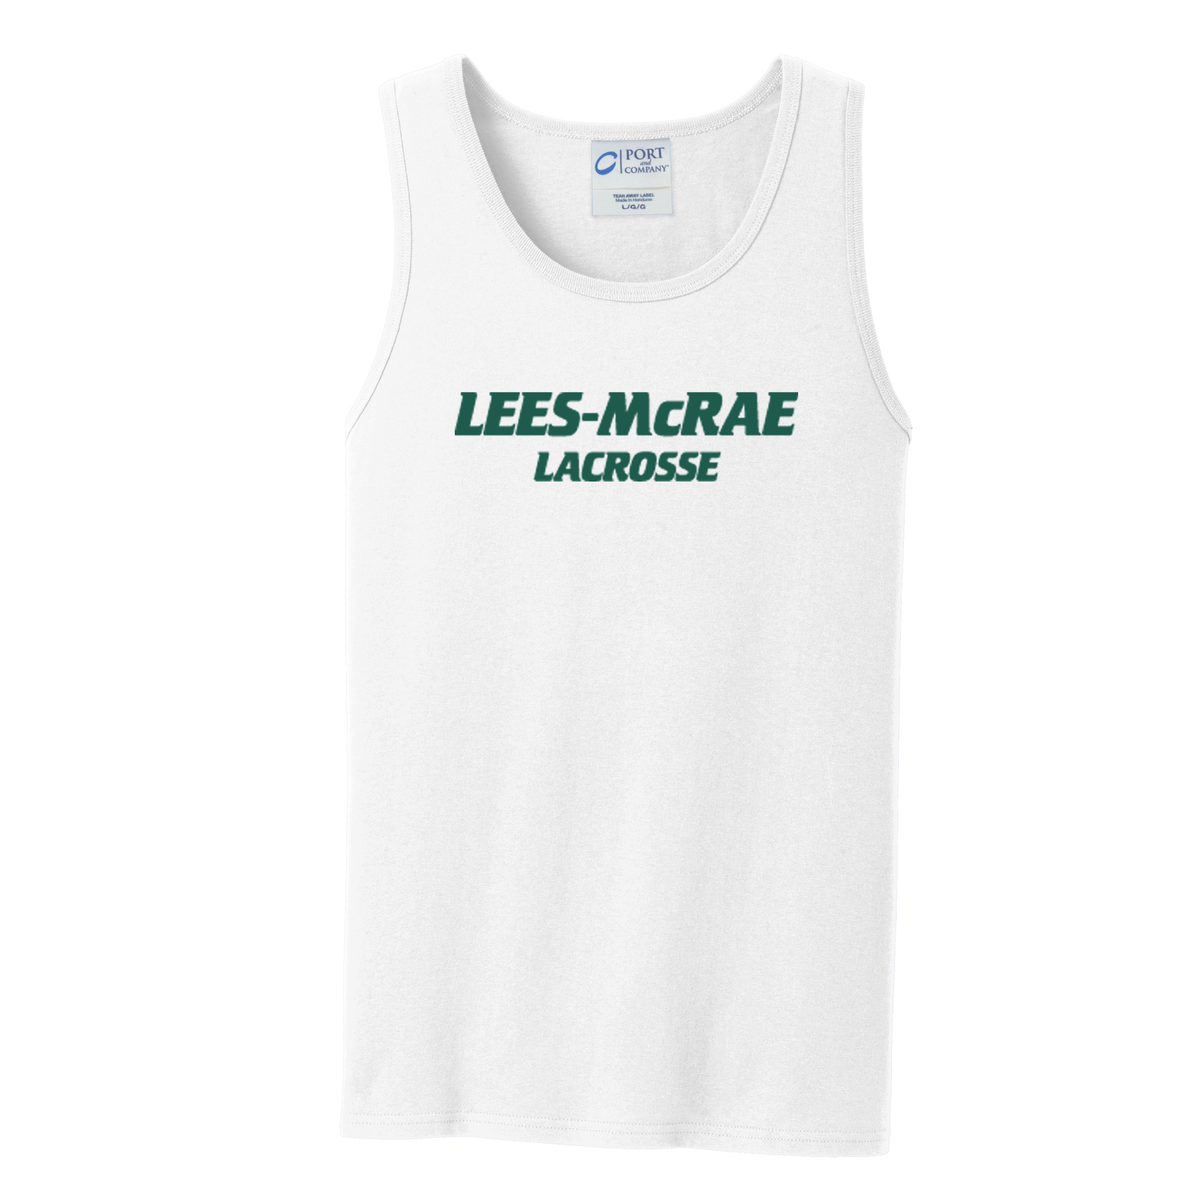 LMC Men's Lacrosse Sleeveless Cotton Tank Top